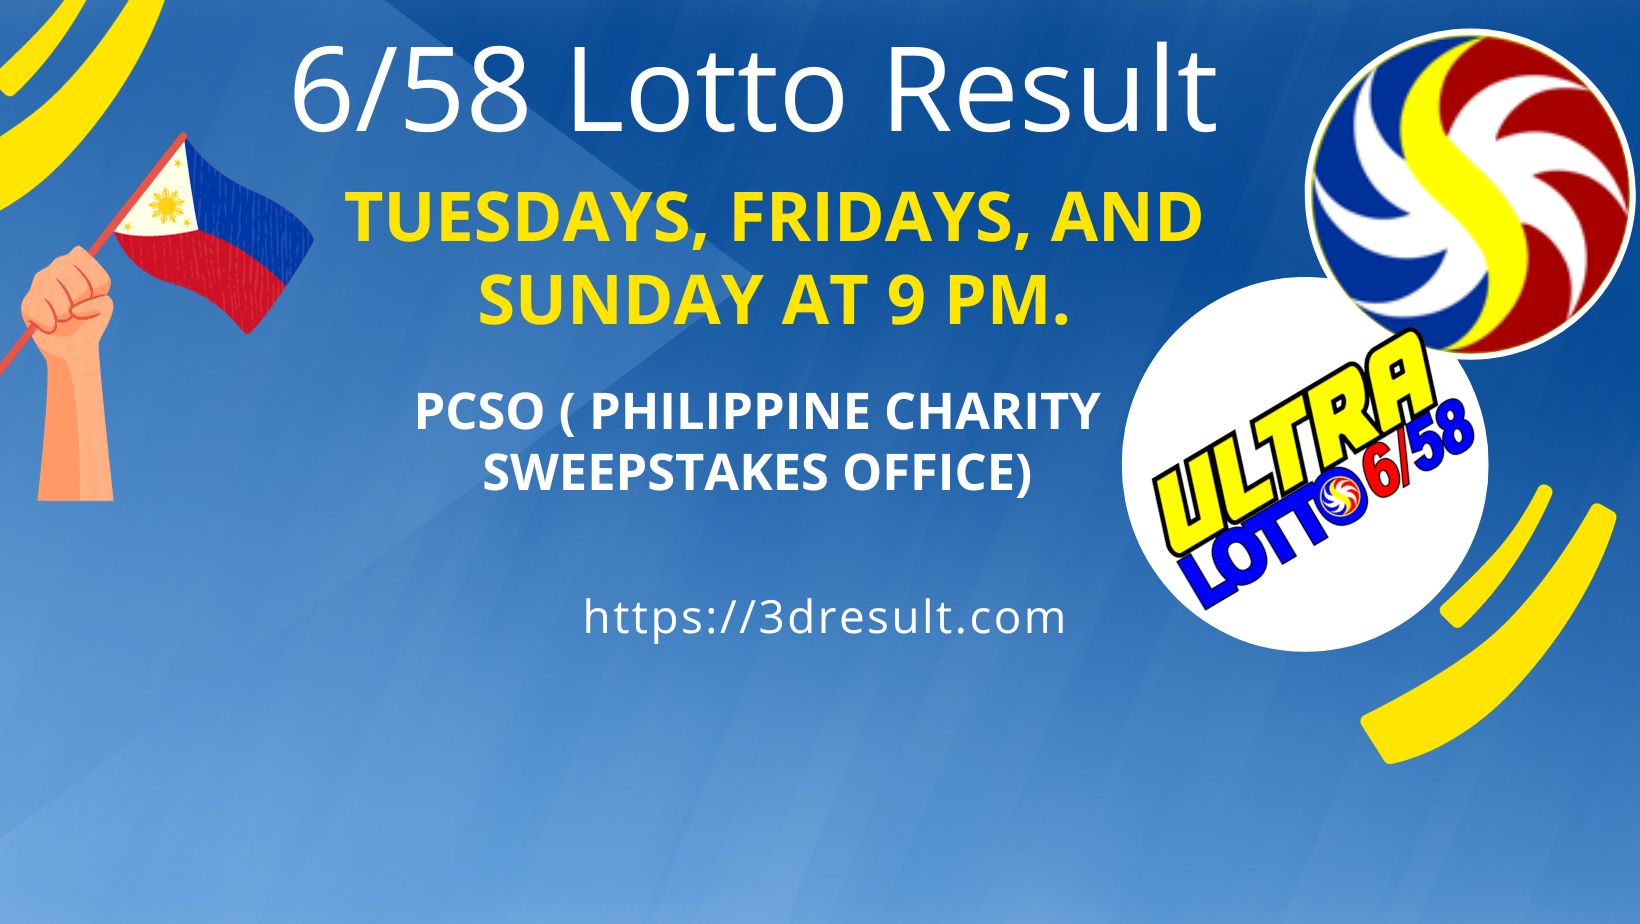 6/58 Lotto Result Summary And History